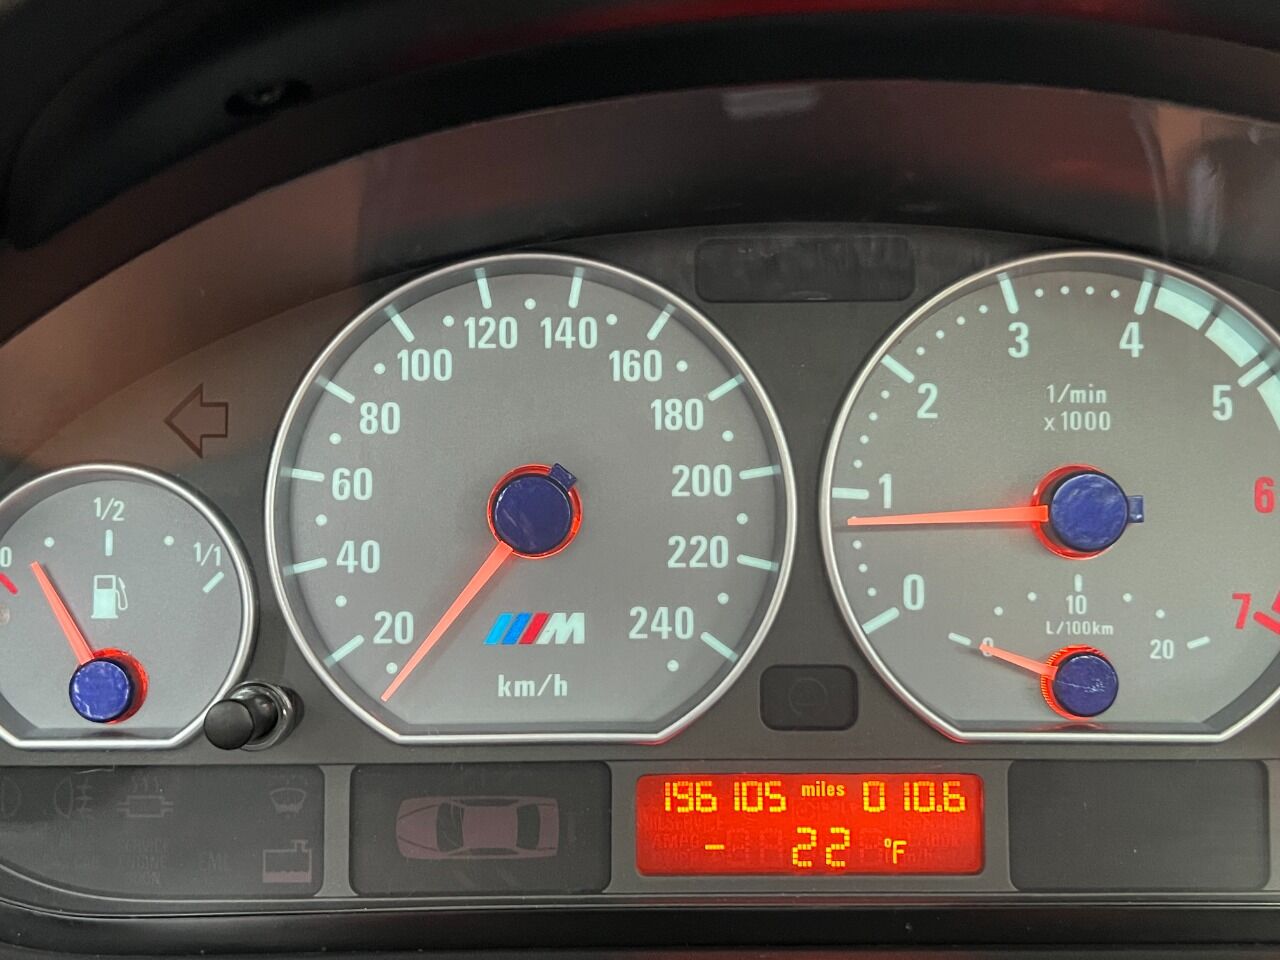 2004 BMW 325Ci Coupe - $7,900